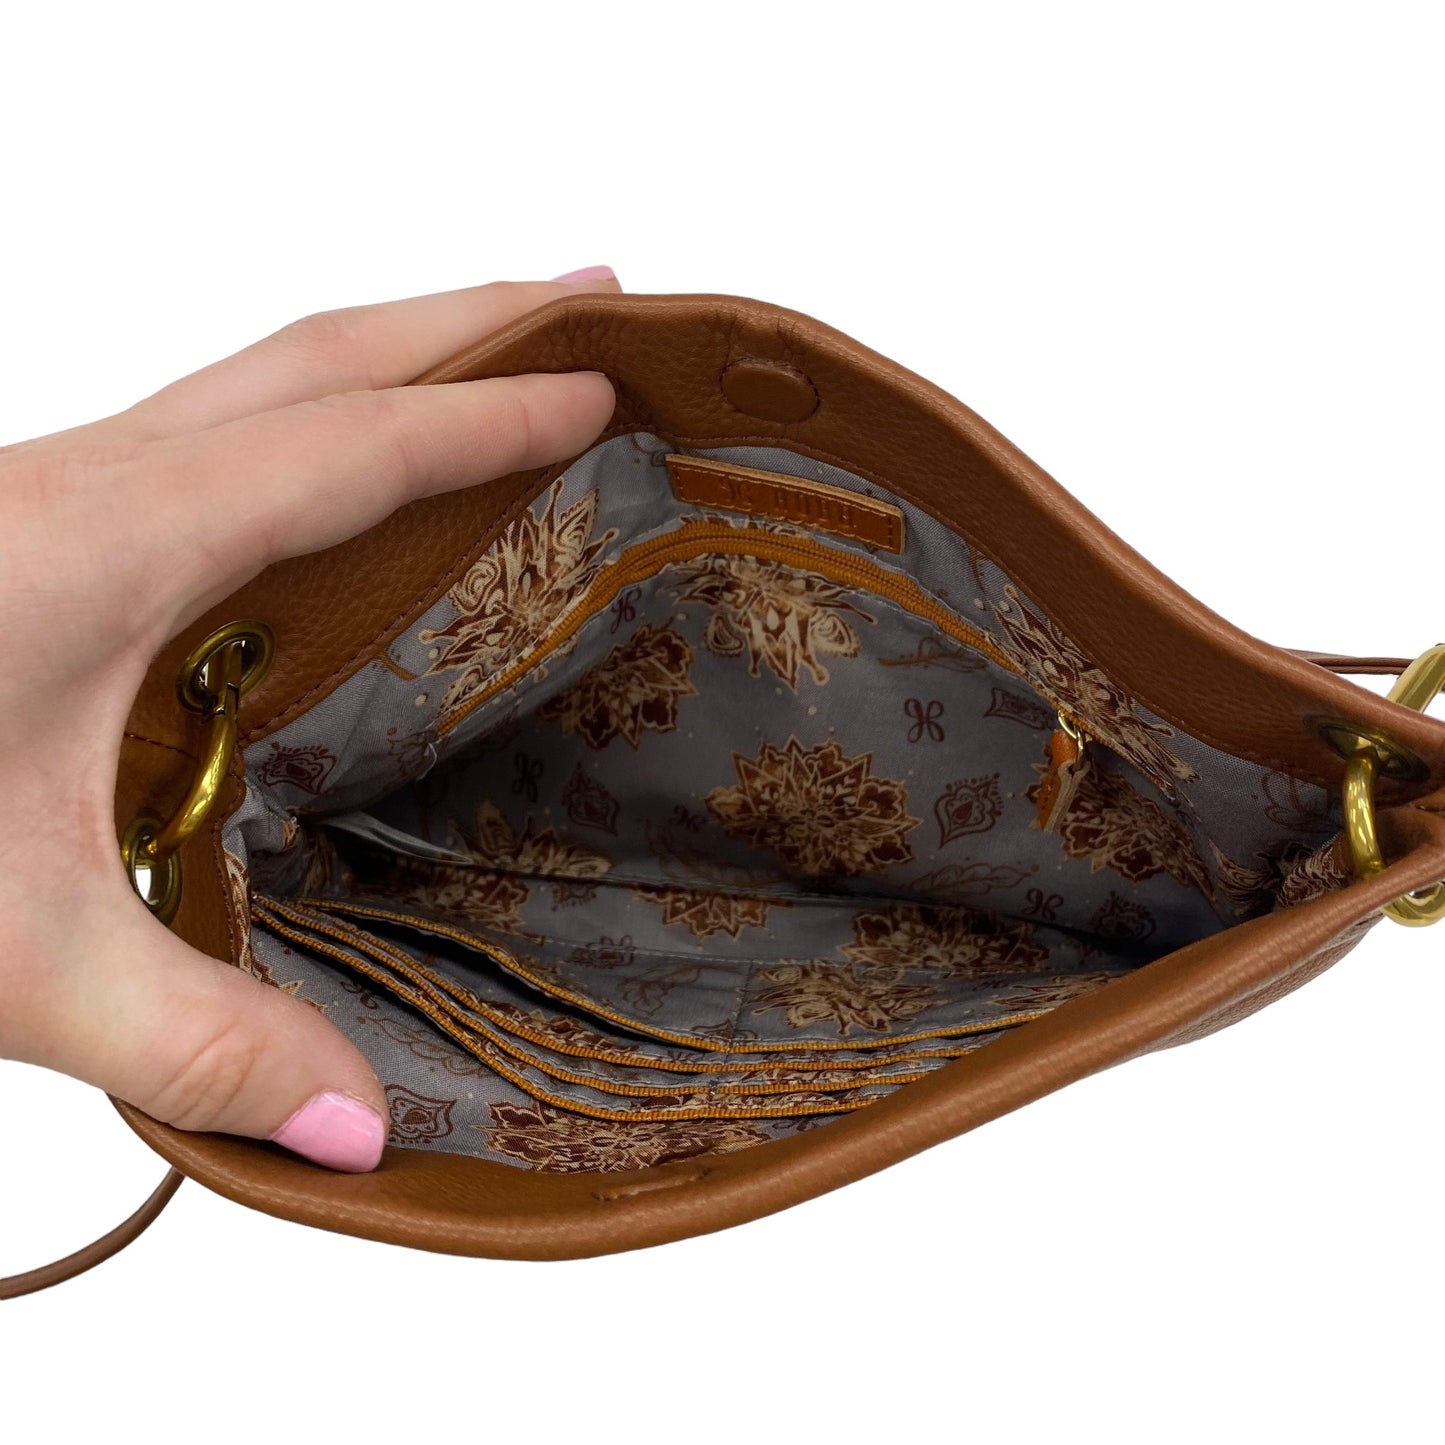 Handbag Leather By Hobo Intl  Size: Small